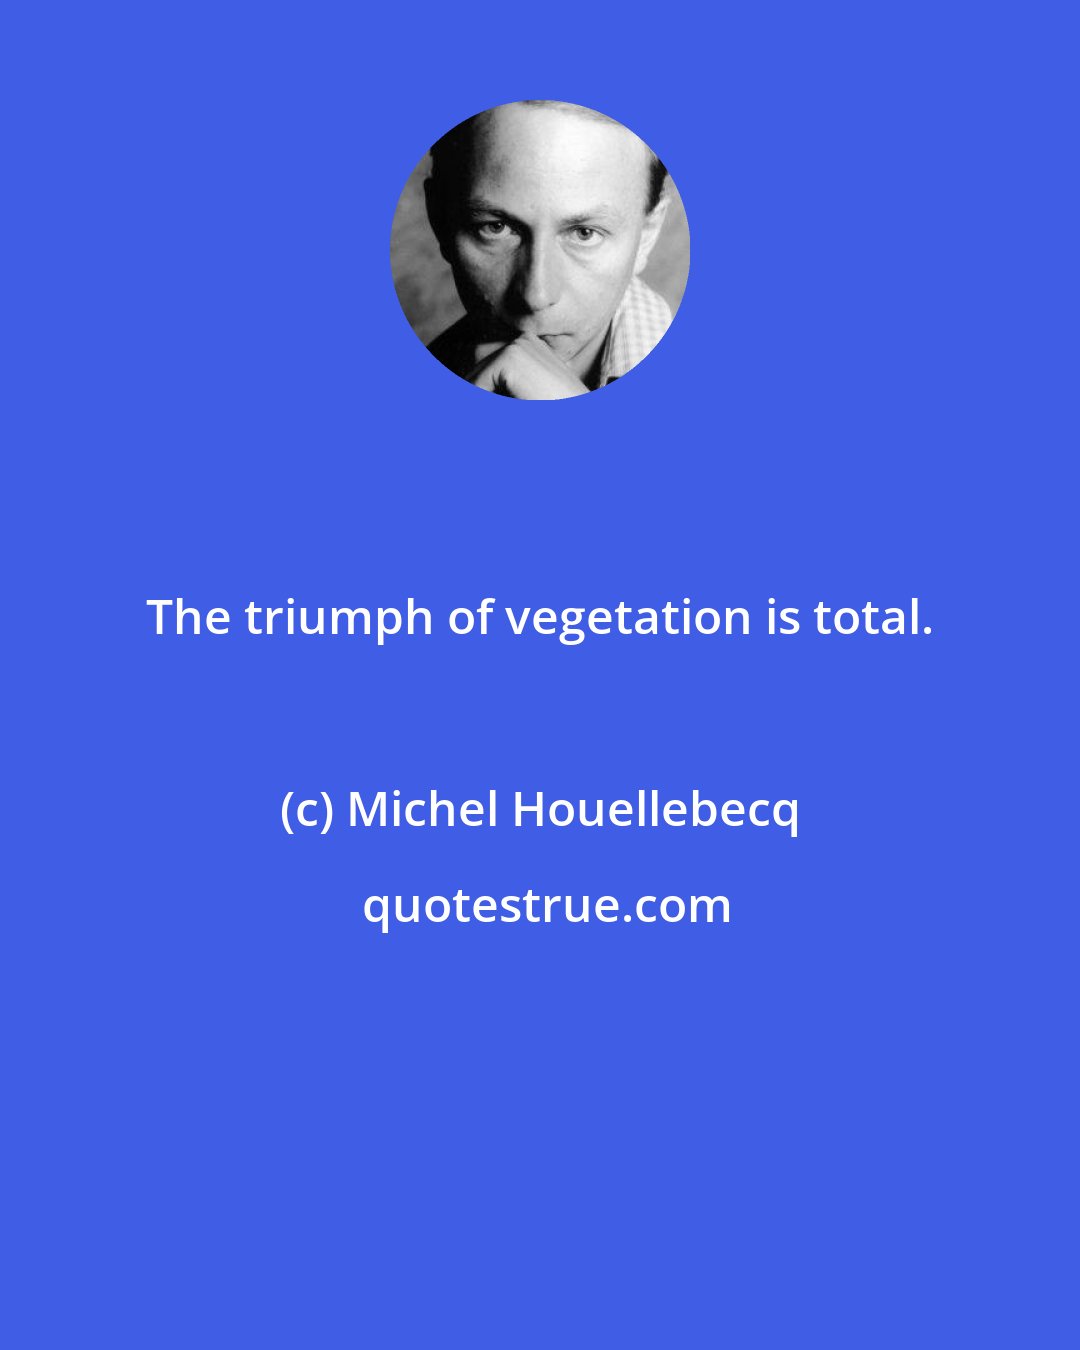 Michel Houellebecq: The triumph of vegetation is total.